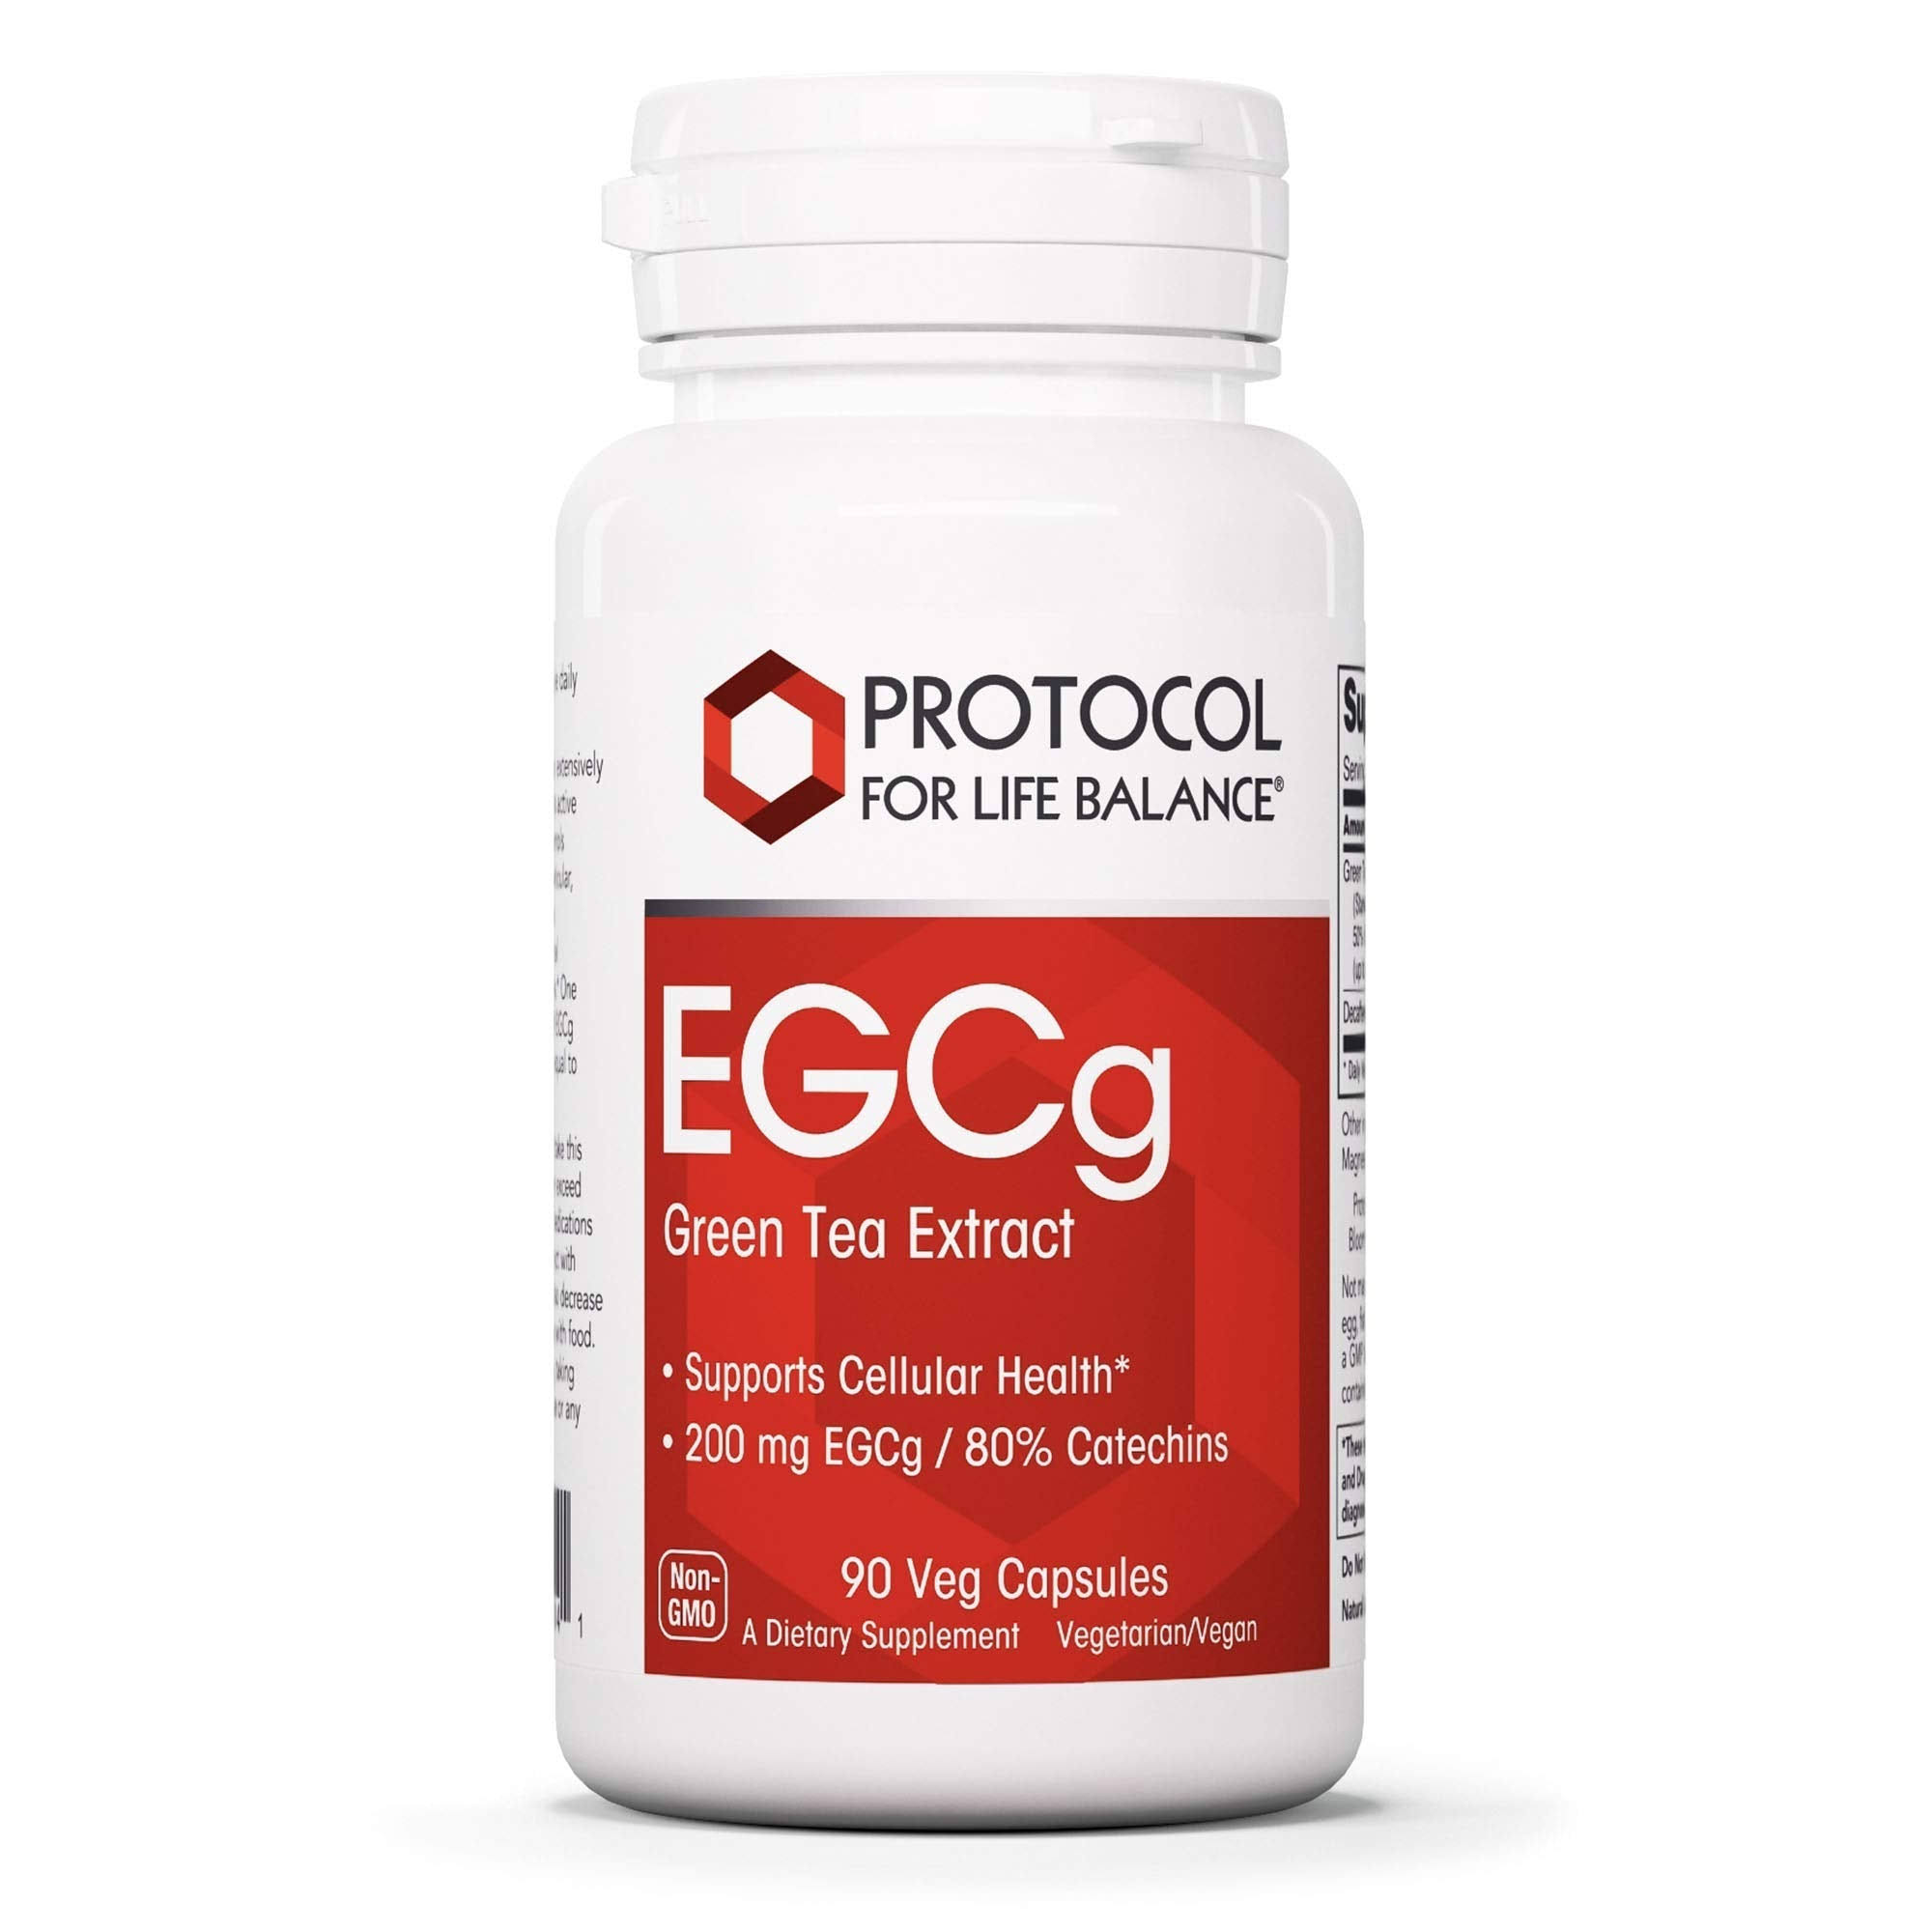 Protocol for Life Balance EGCg Green Tea Extract - 90 Veg Capsules